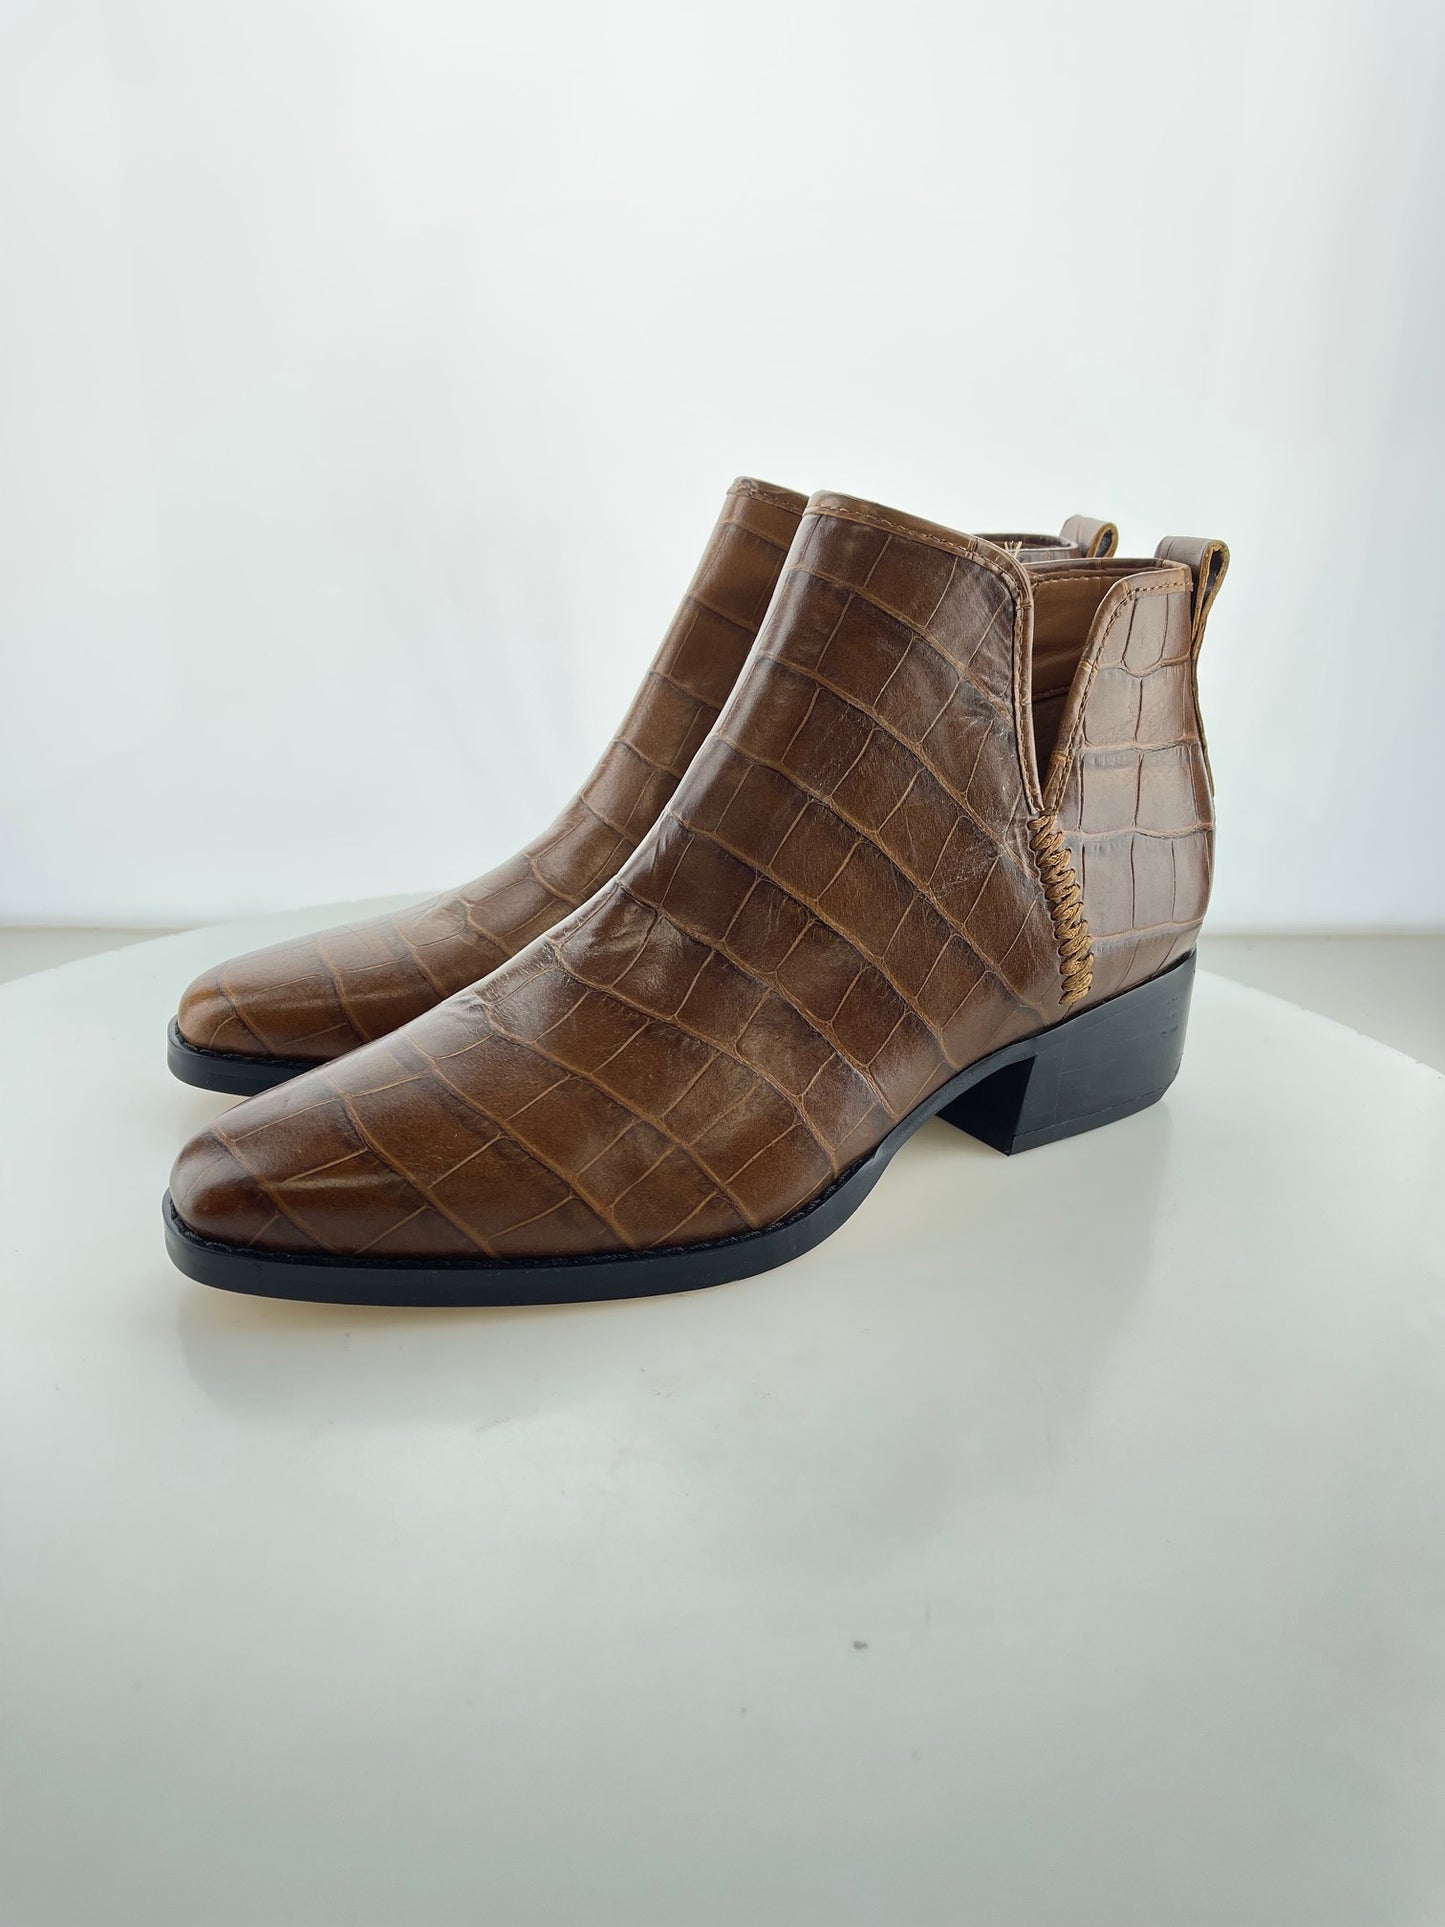 Luxury Fashion Retailer | Women's Boot & Bootie Pallets | NWOT & Returns | 150 Pair Min.